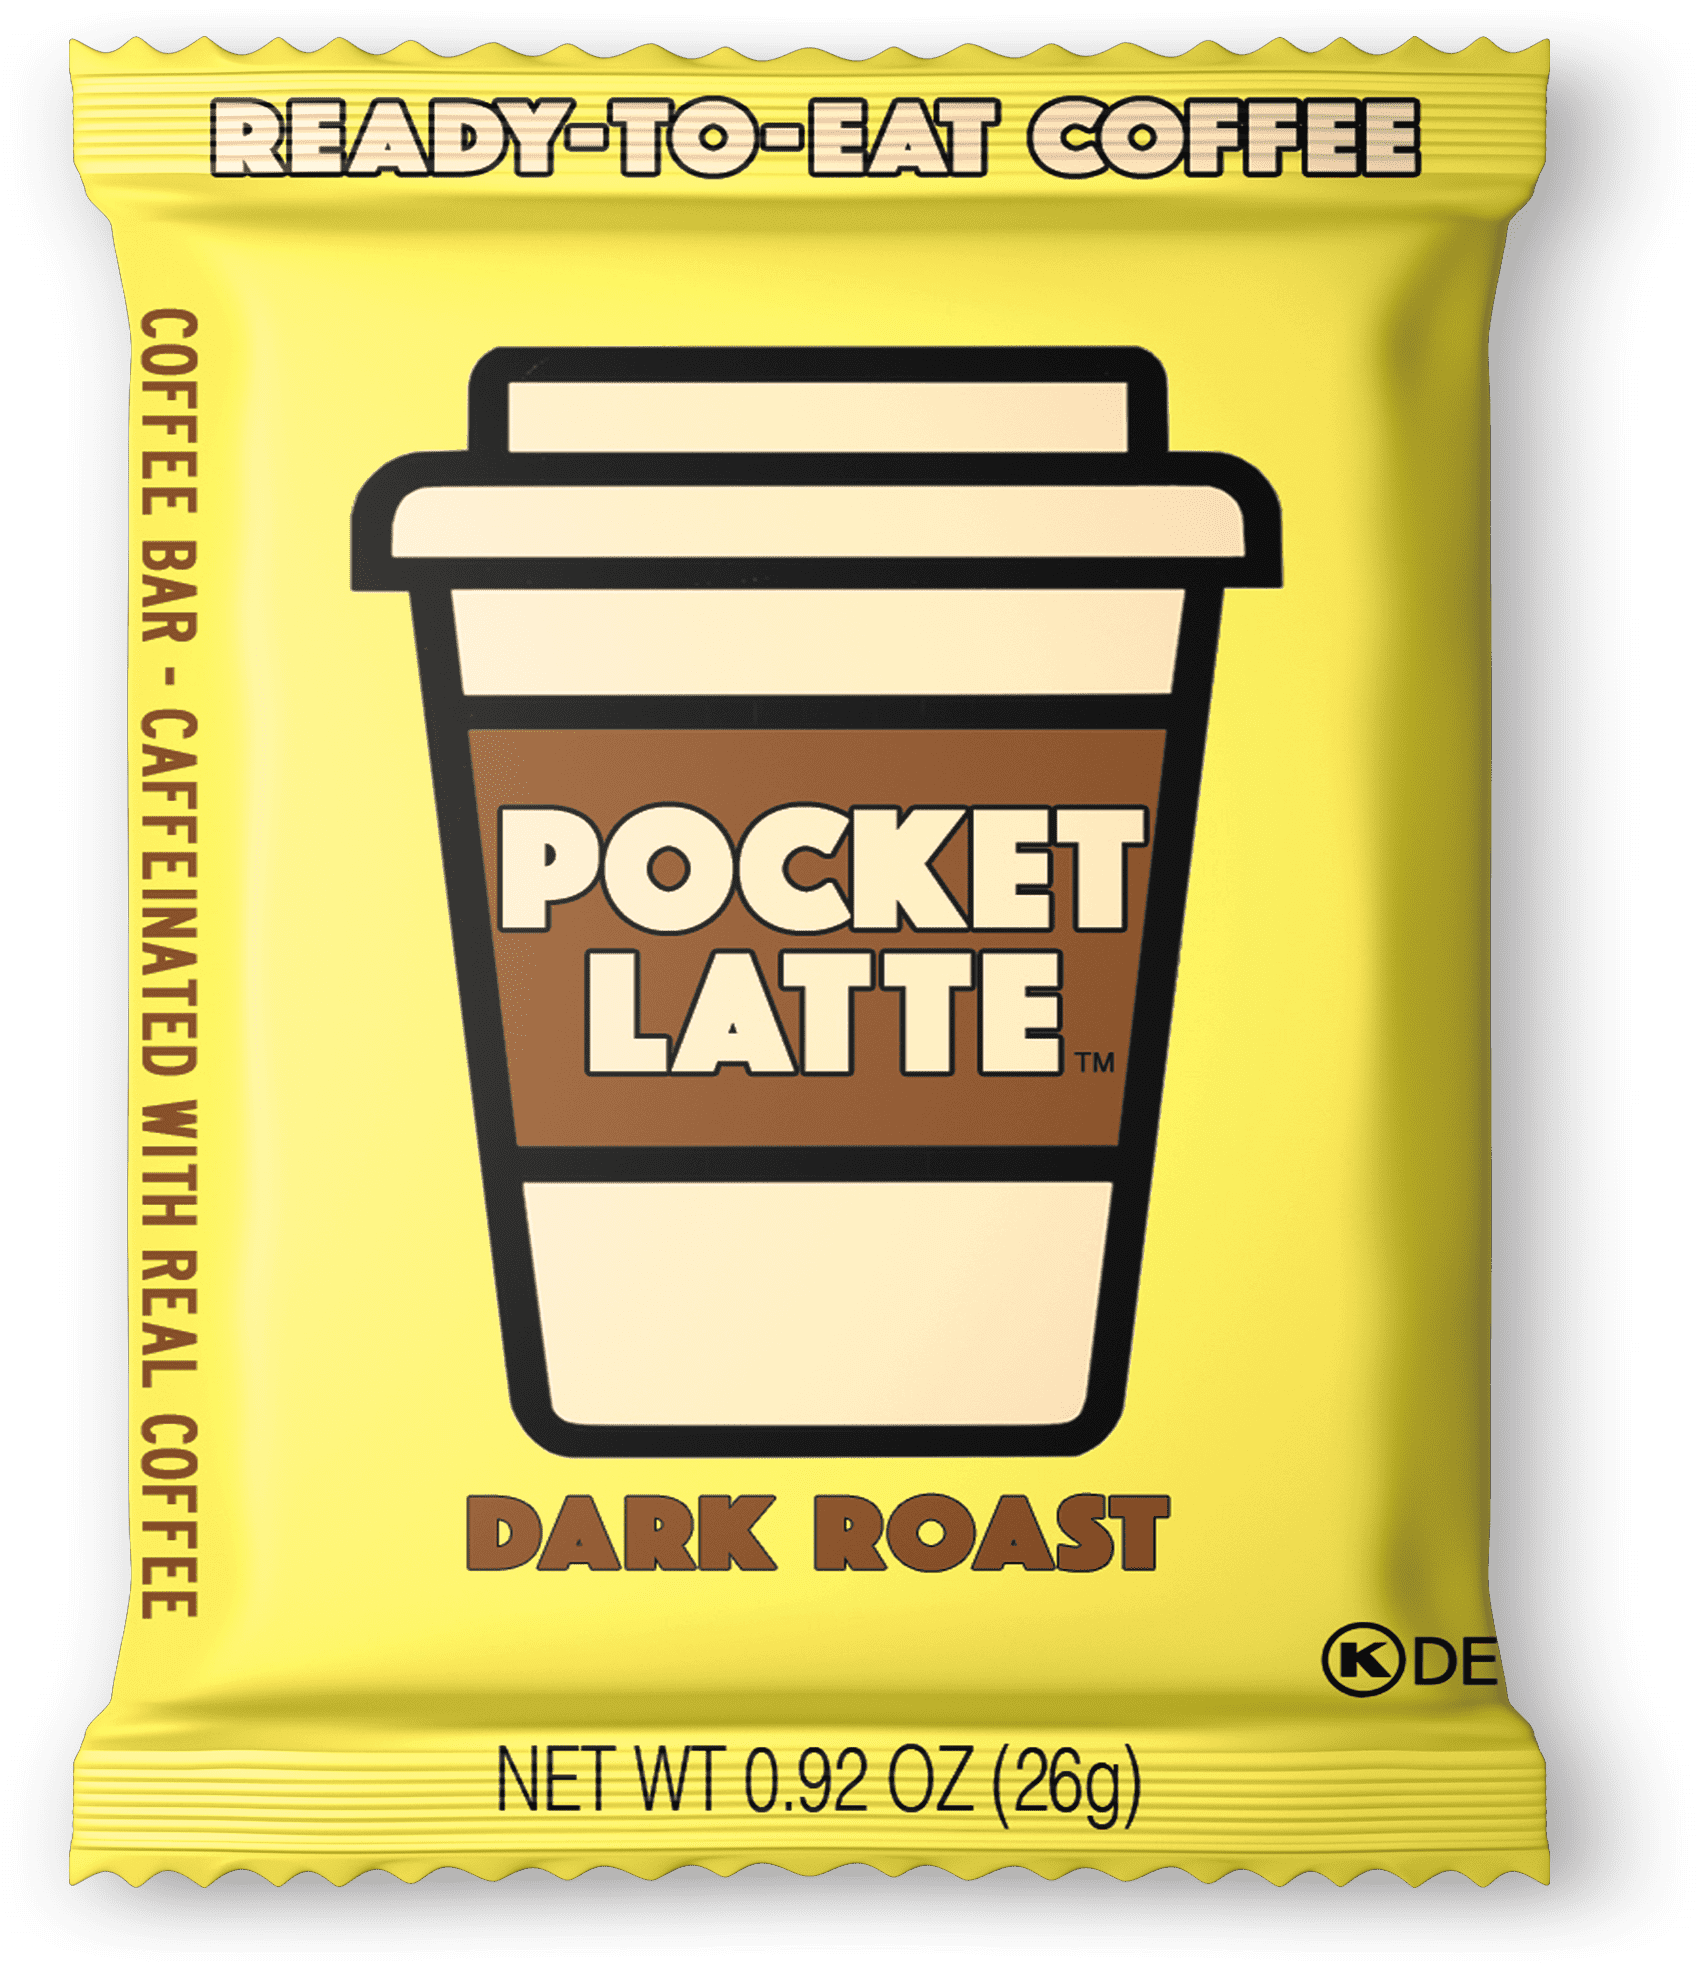 Pocket Latte ''Dark Roast'' Coffee Bar 8 innerpacks per case